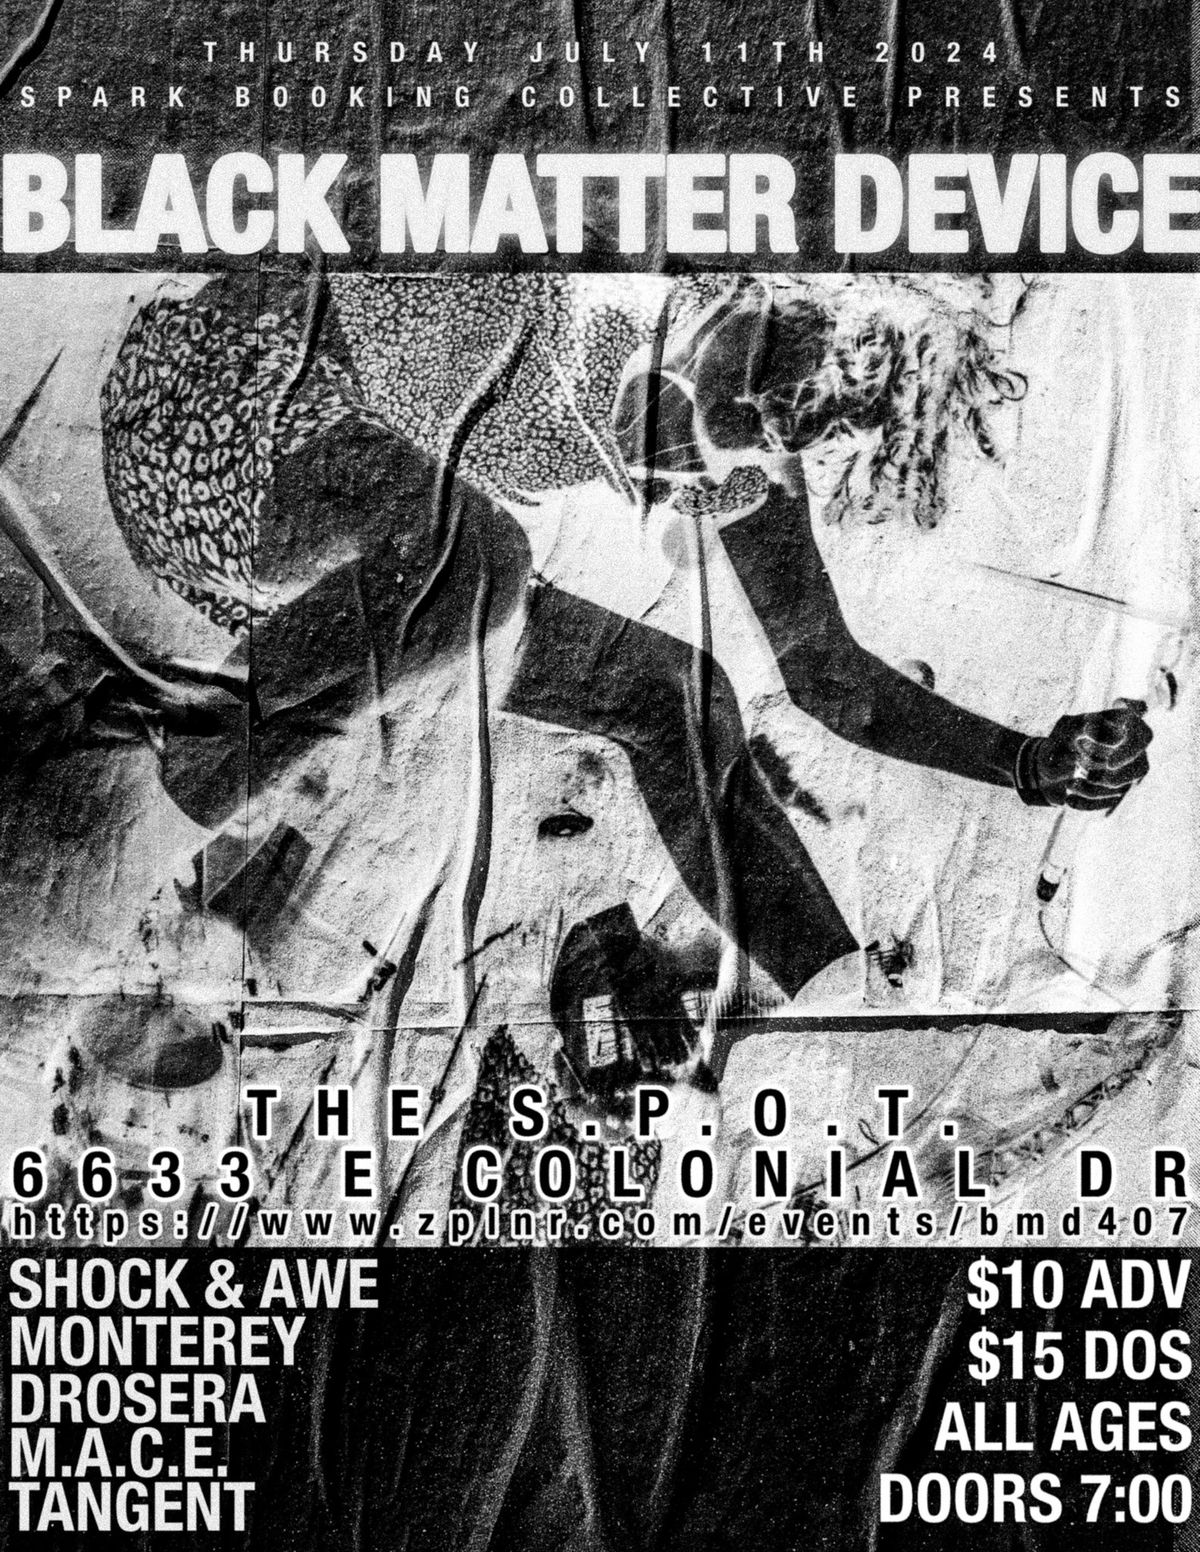 Black Matter Device, Shock & Awe, Drosera, M.A.C.E. & Tangent at The S.P.O.T.